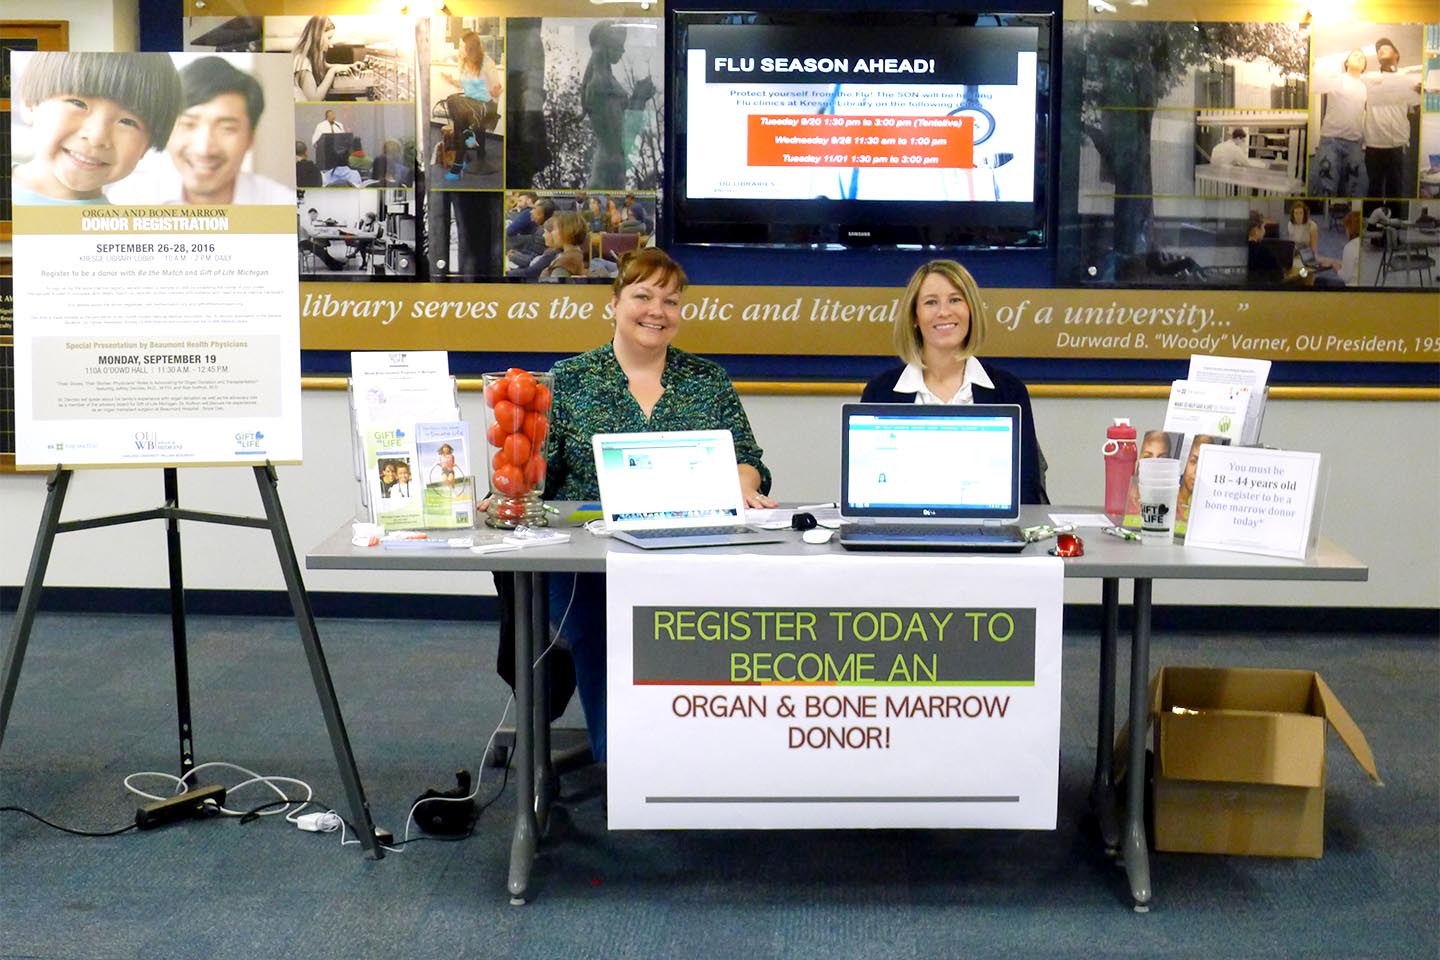 Organ & Bone Marrow Donor Registration Drive